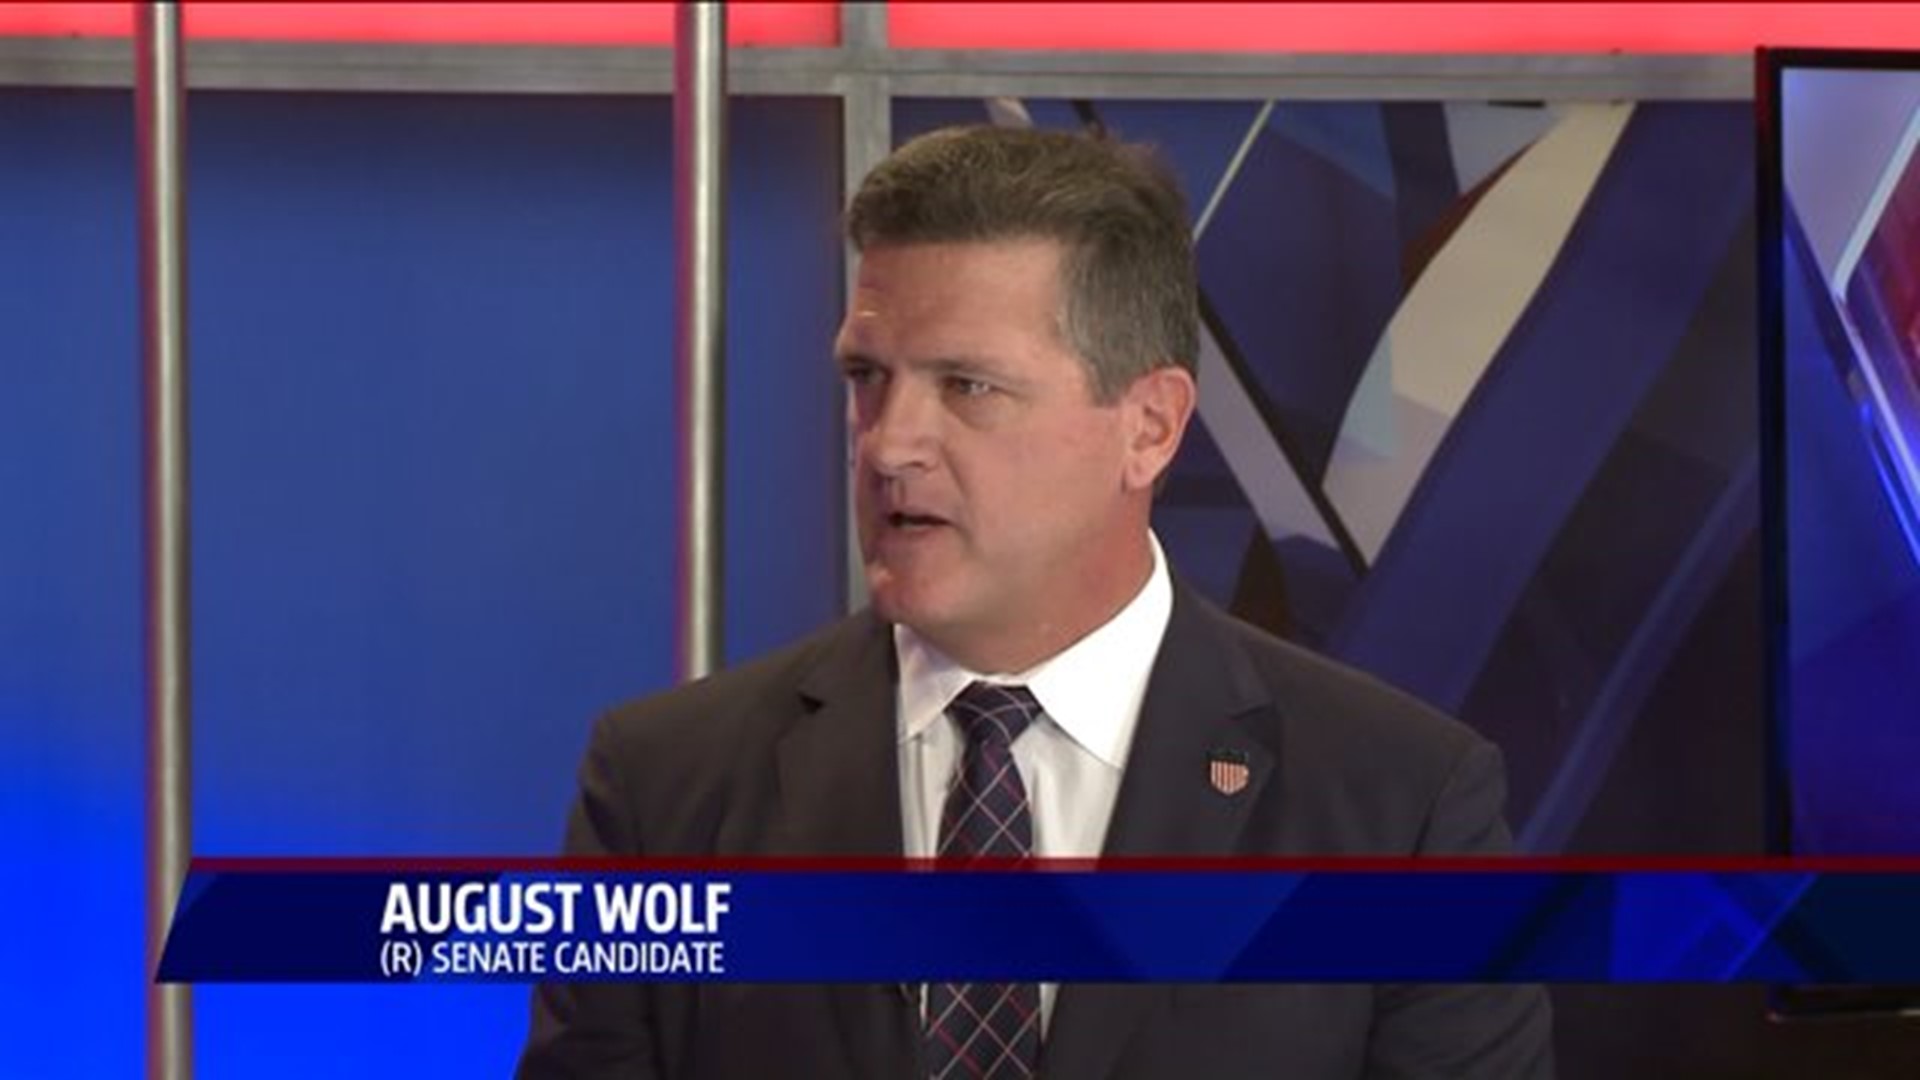 Senate candidate August Wolf